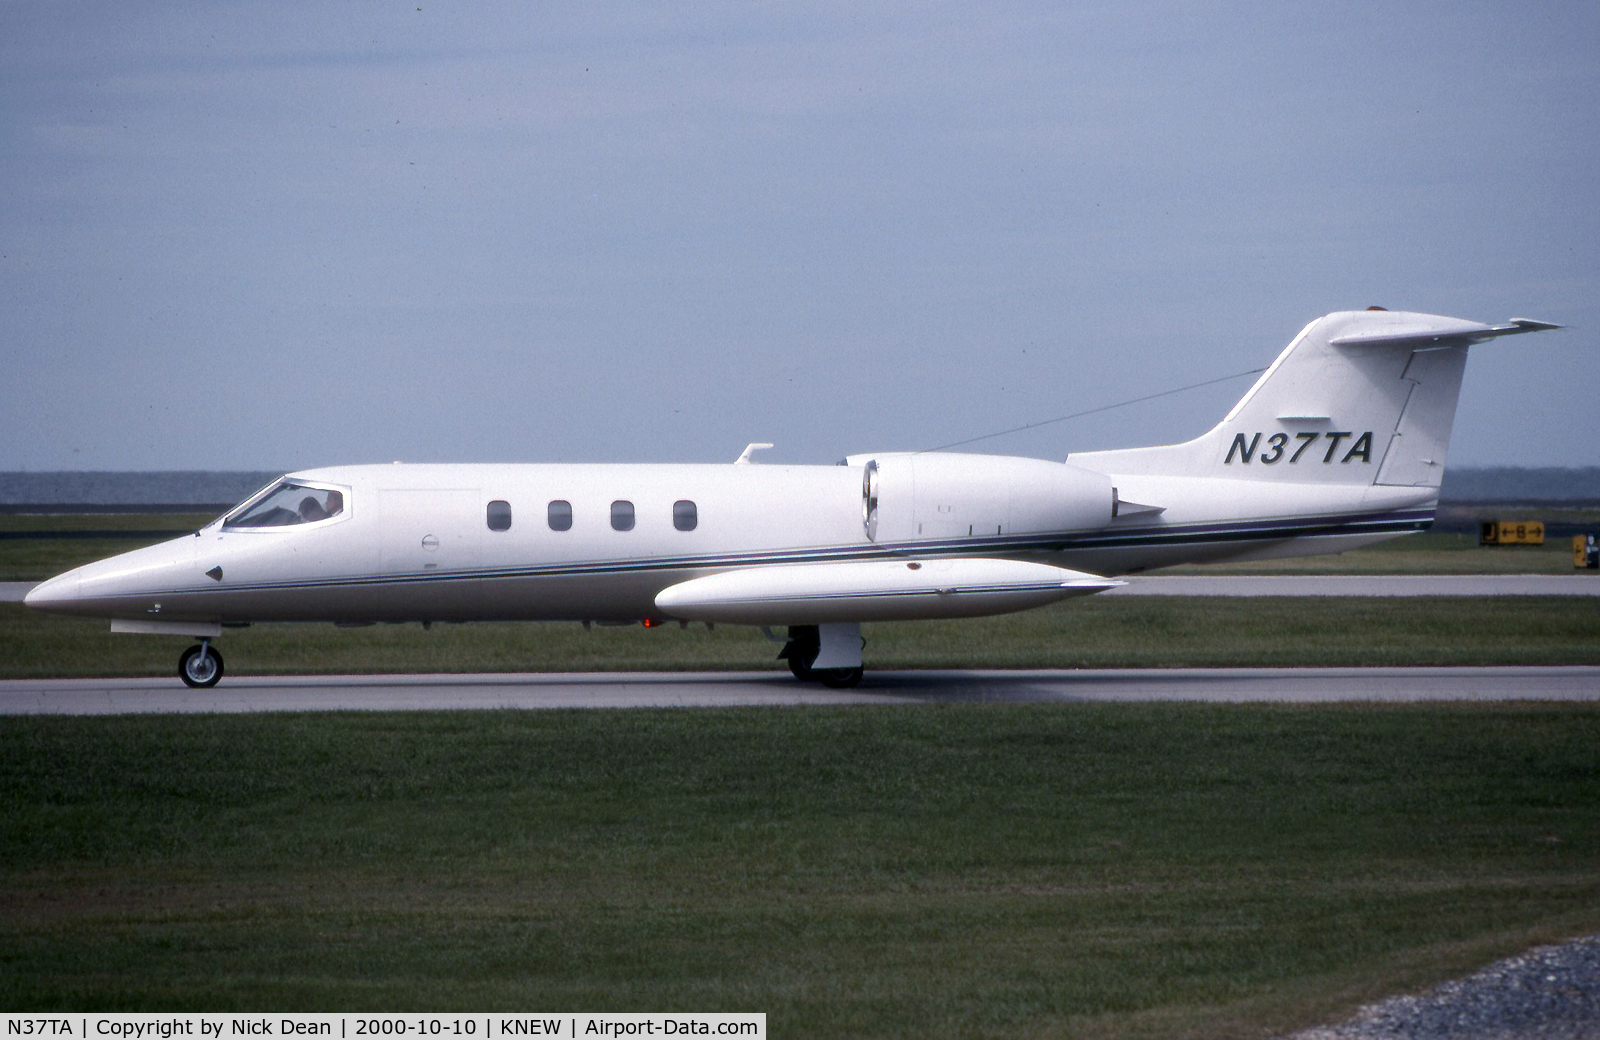 N37TA, 1975 Gates Learjet 35 C/N 034, KNEW